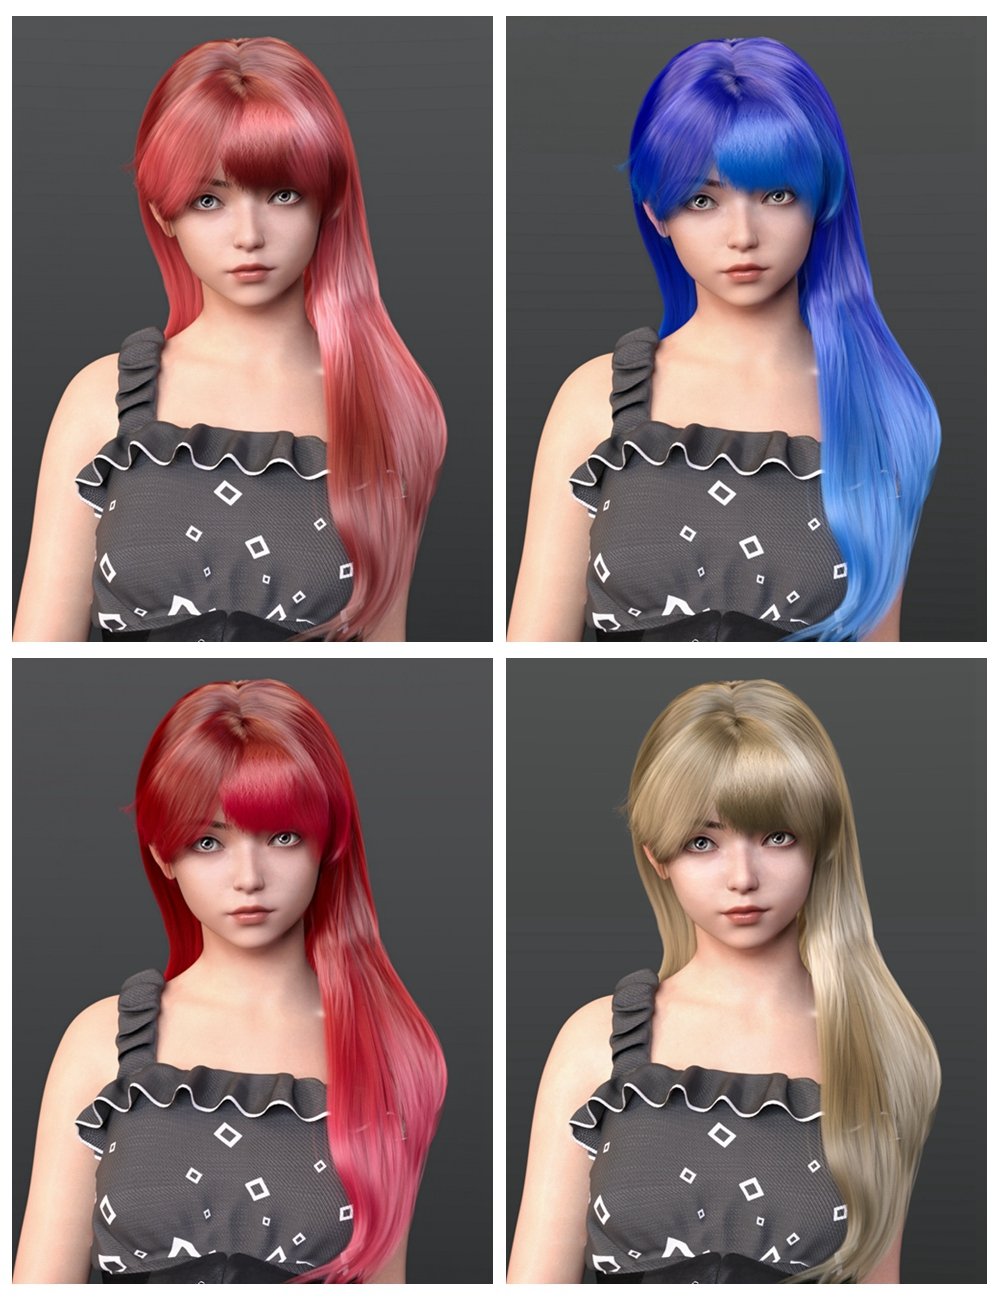 Kin Hair for Genesis 9 by: Ergou, 3D Models by Daz 3D